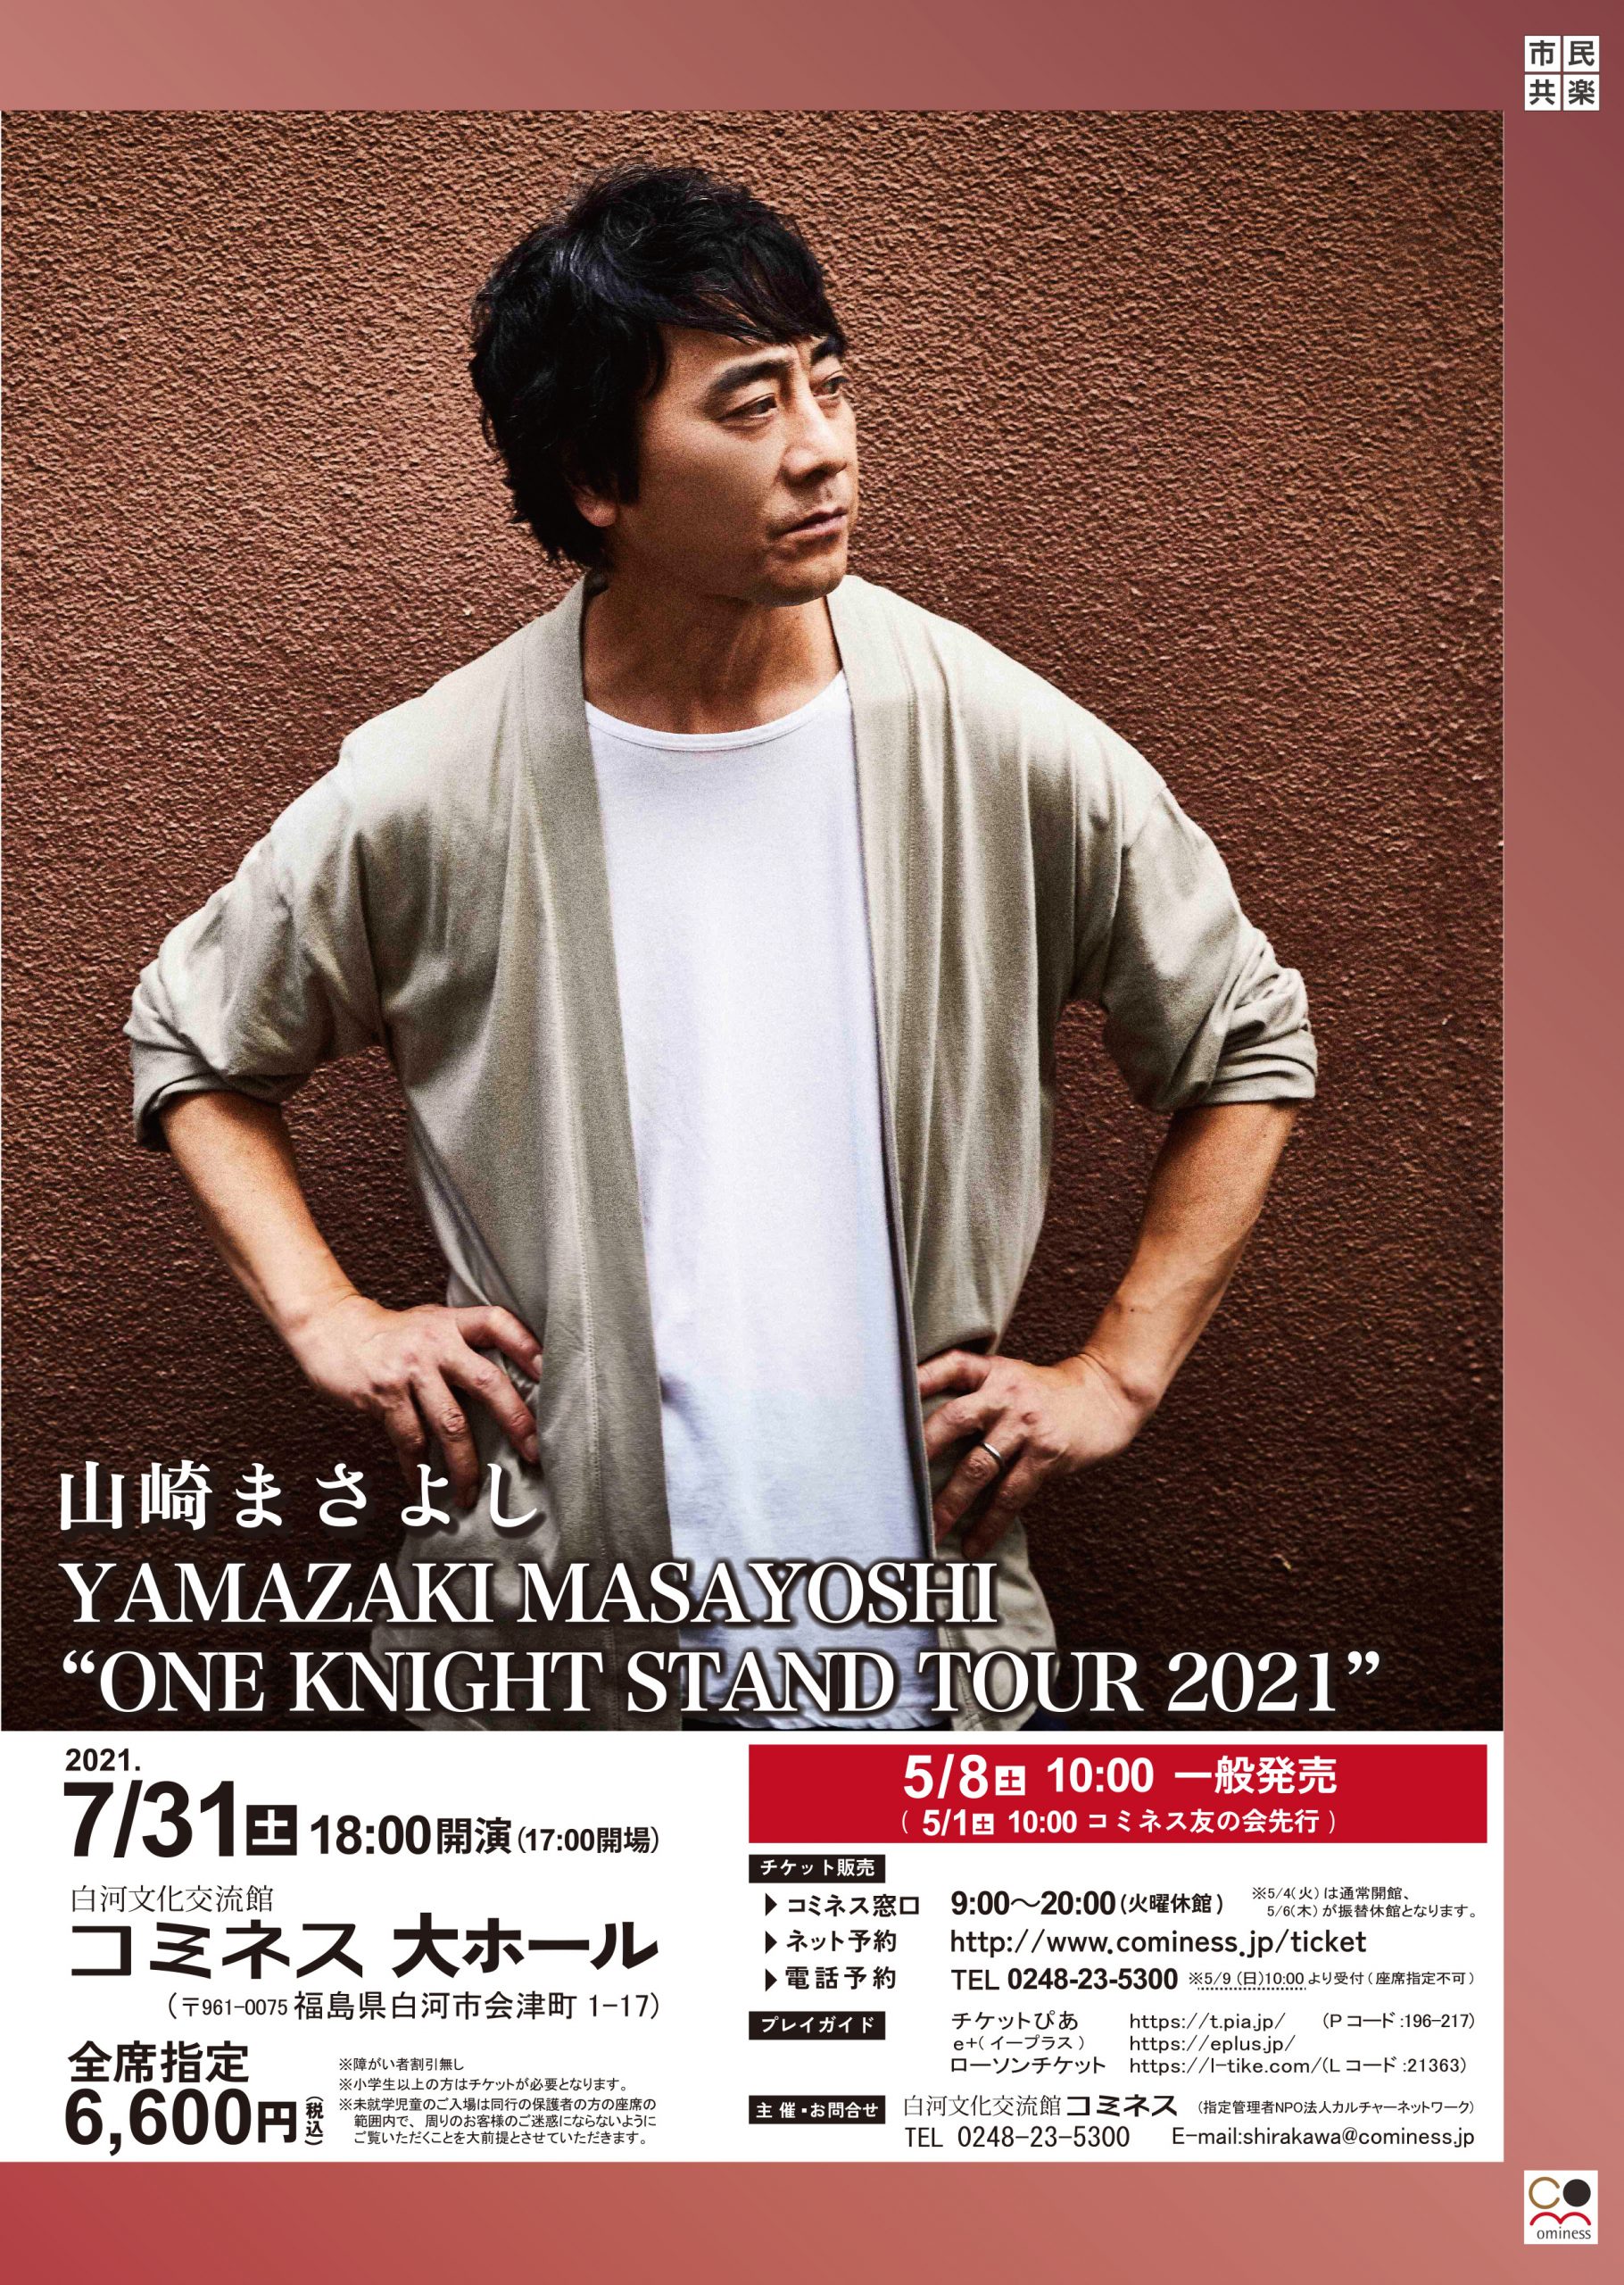 YAMAZAKI MASAYOSHI ”ONE KNIGHT STAND TOUR 2021” | 白河文化